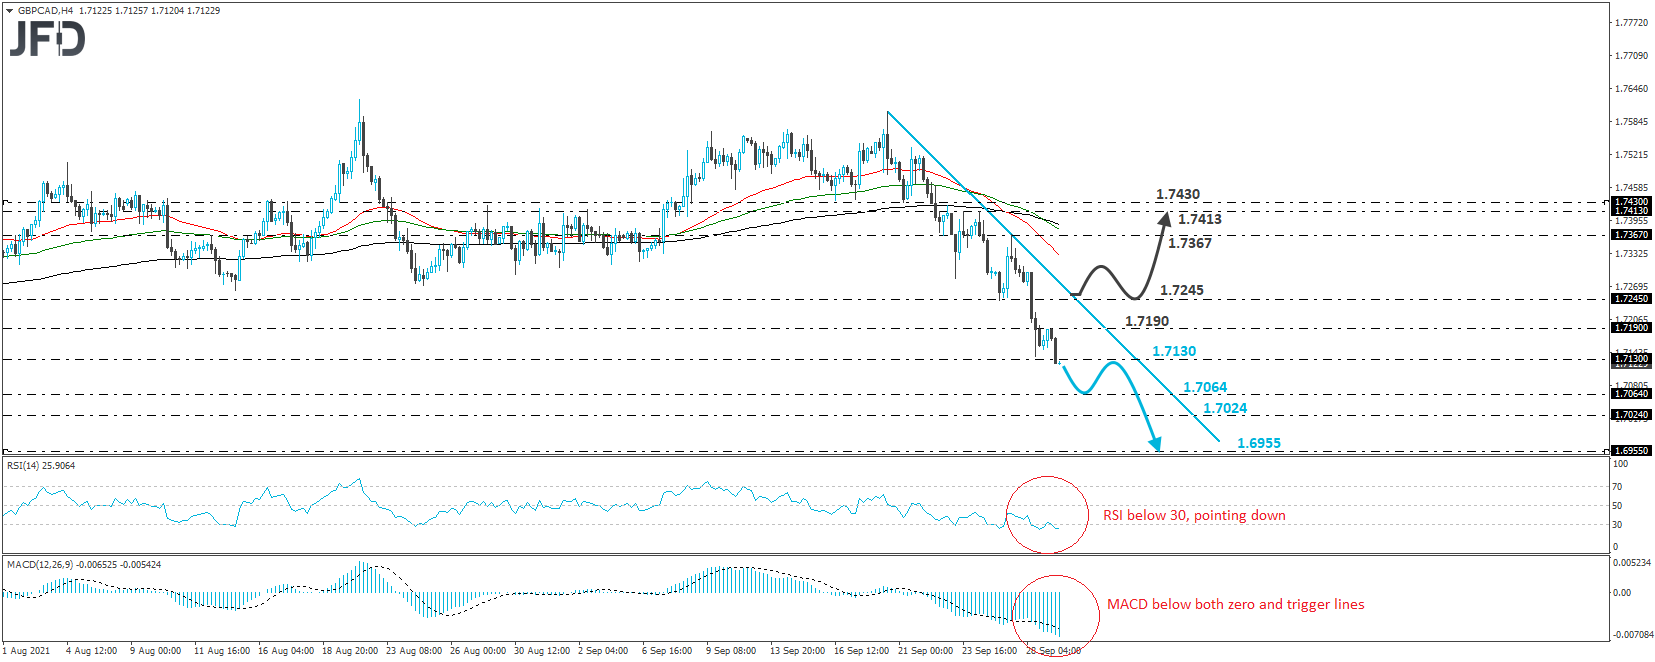 GBP/CAD 4-hour chart technical analysis